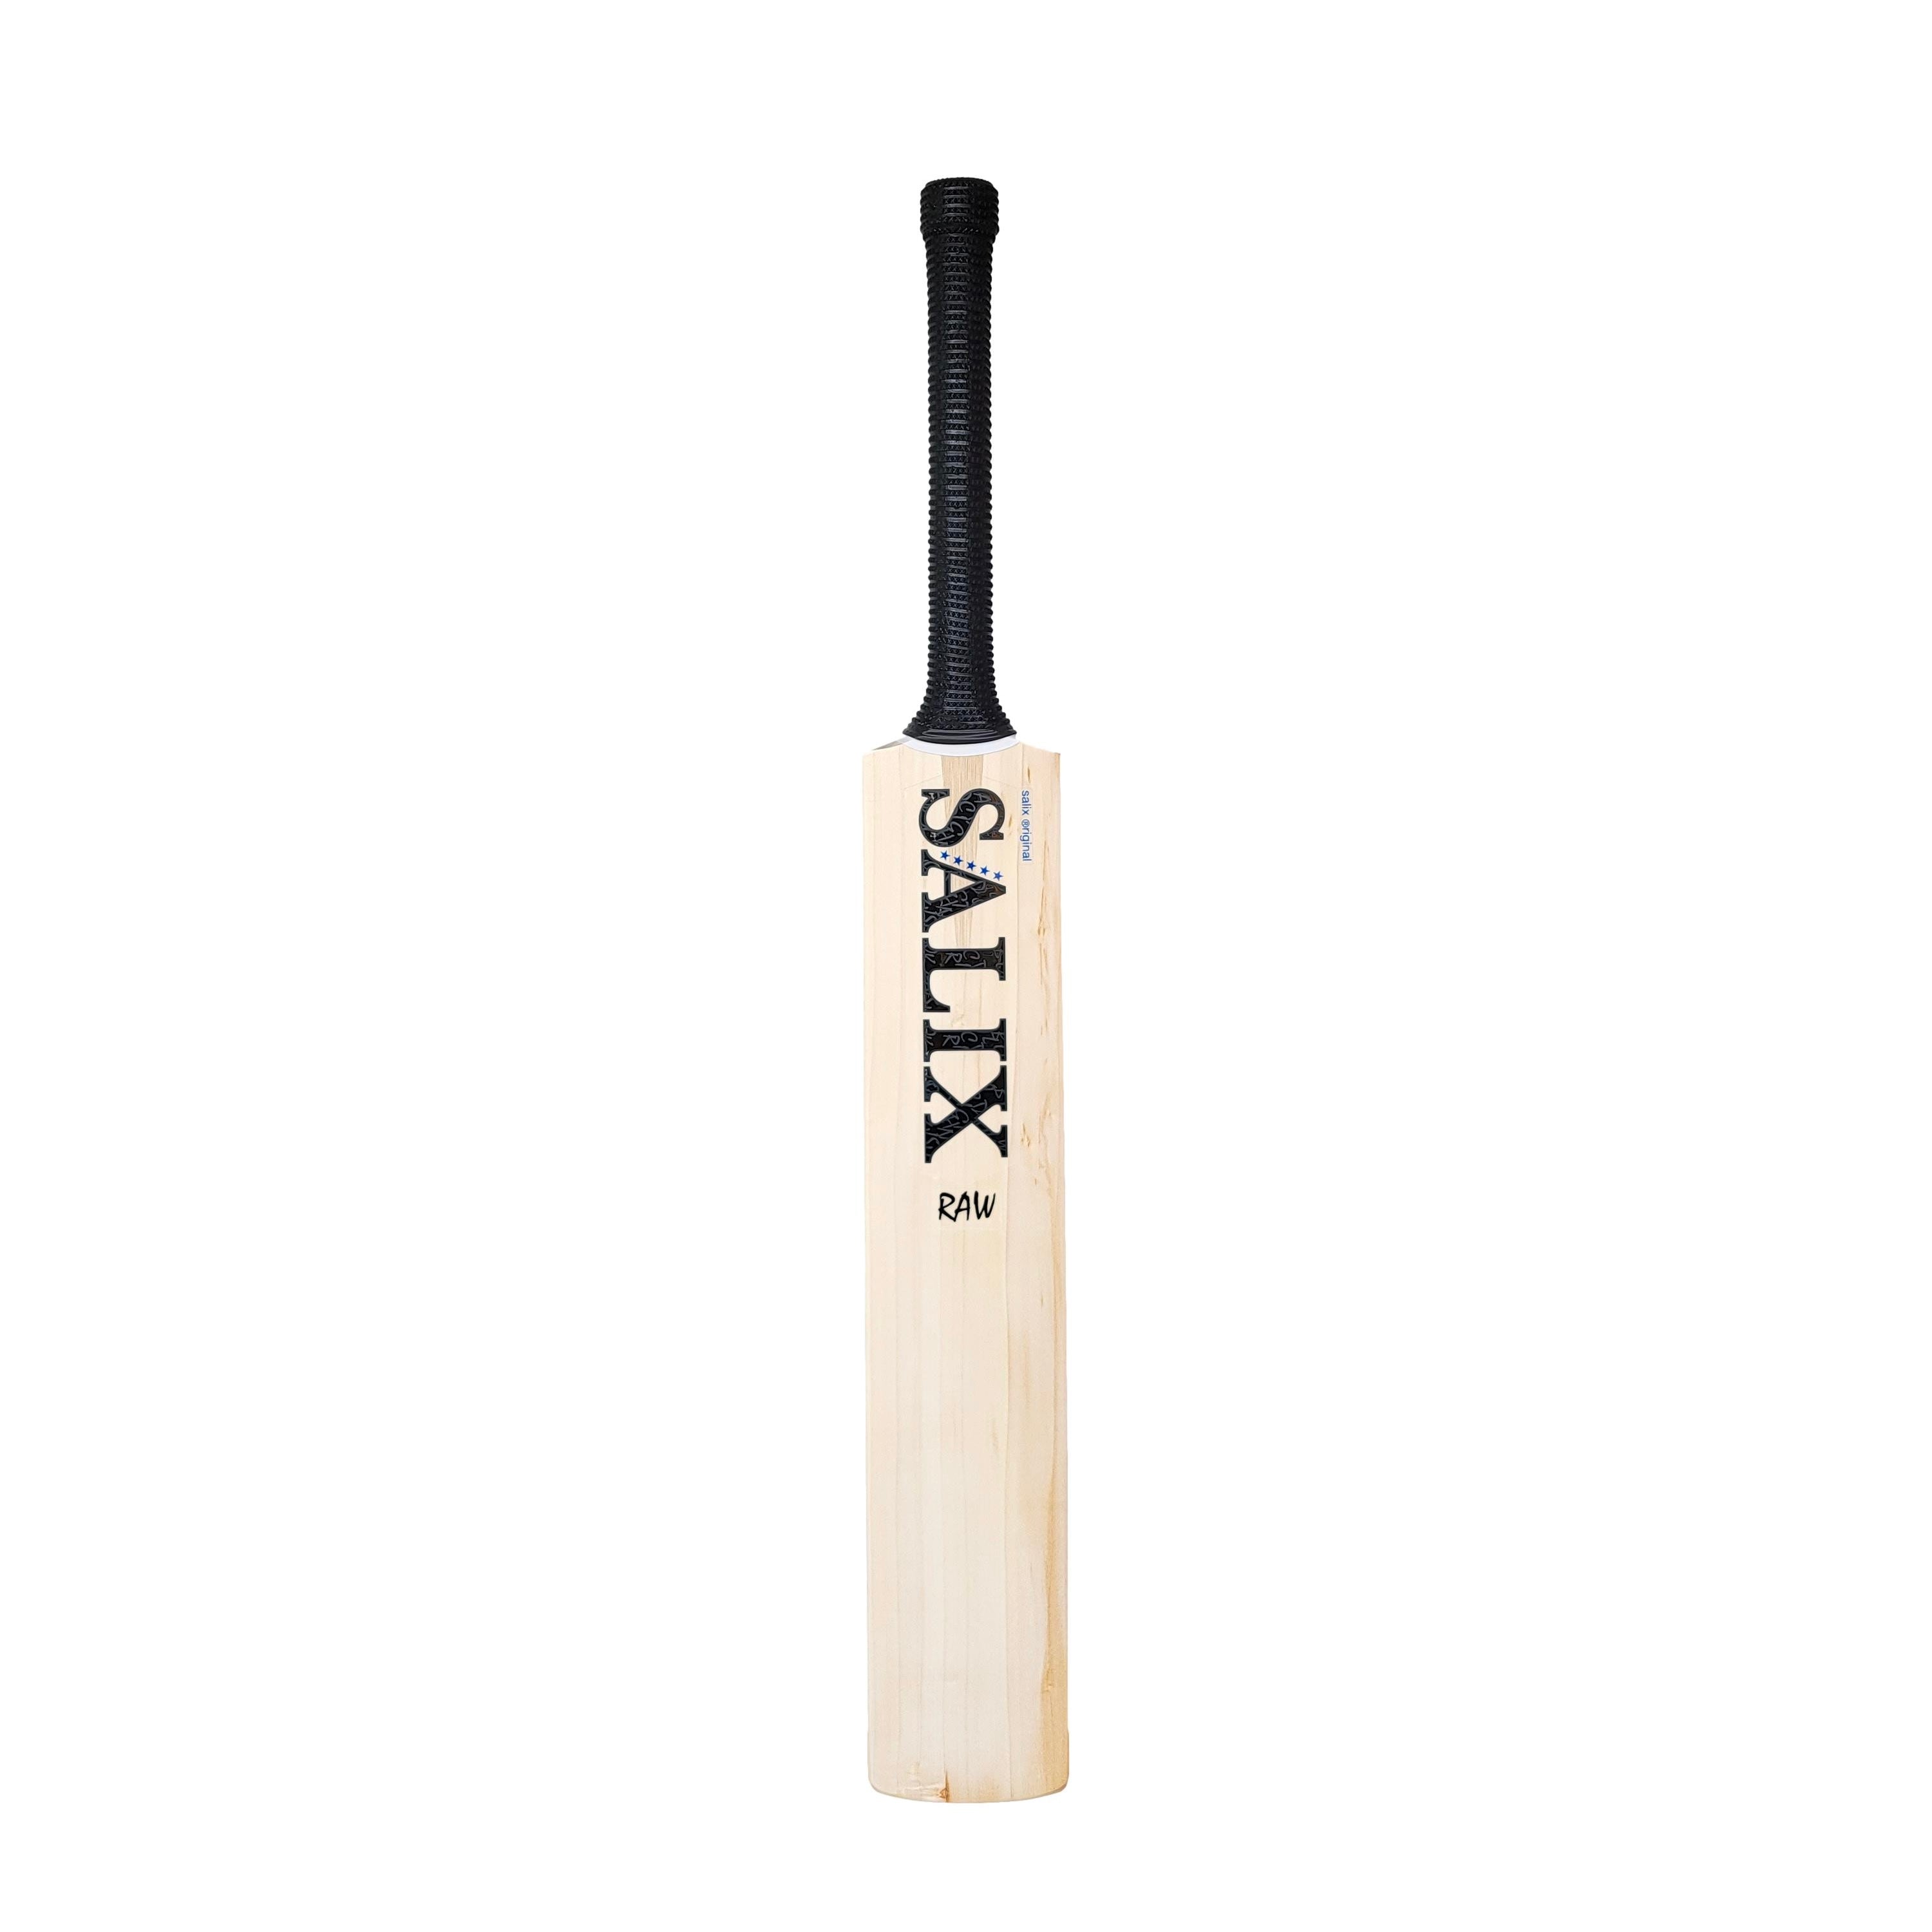 Salix Raw w/sA Cricket Bat